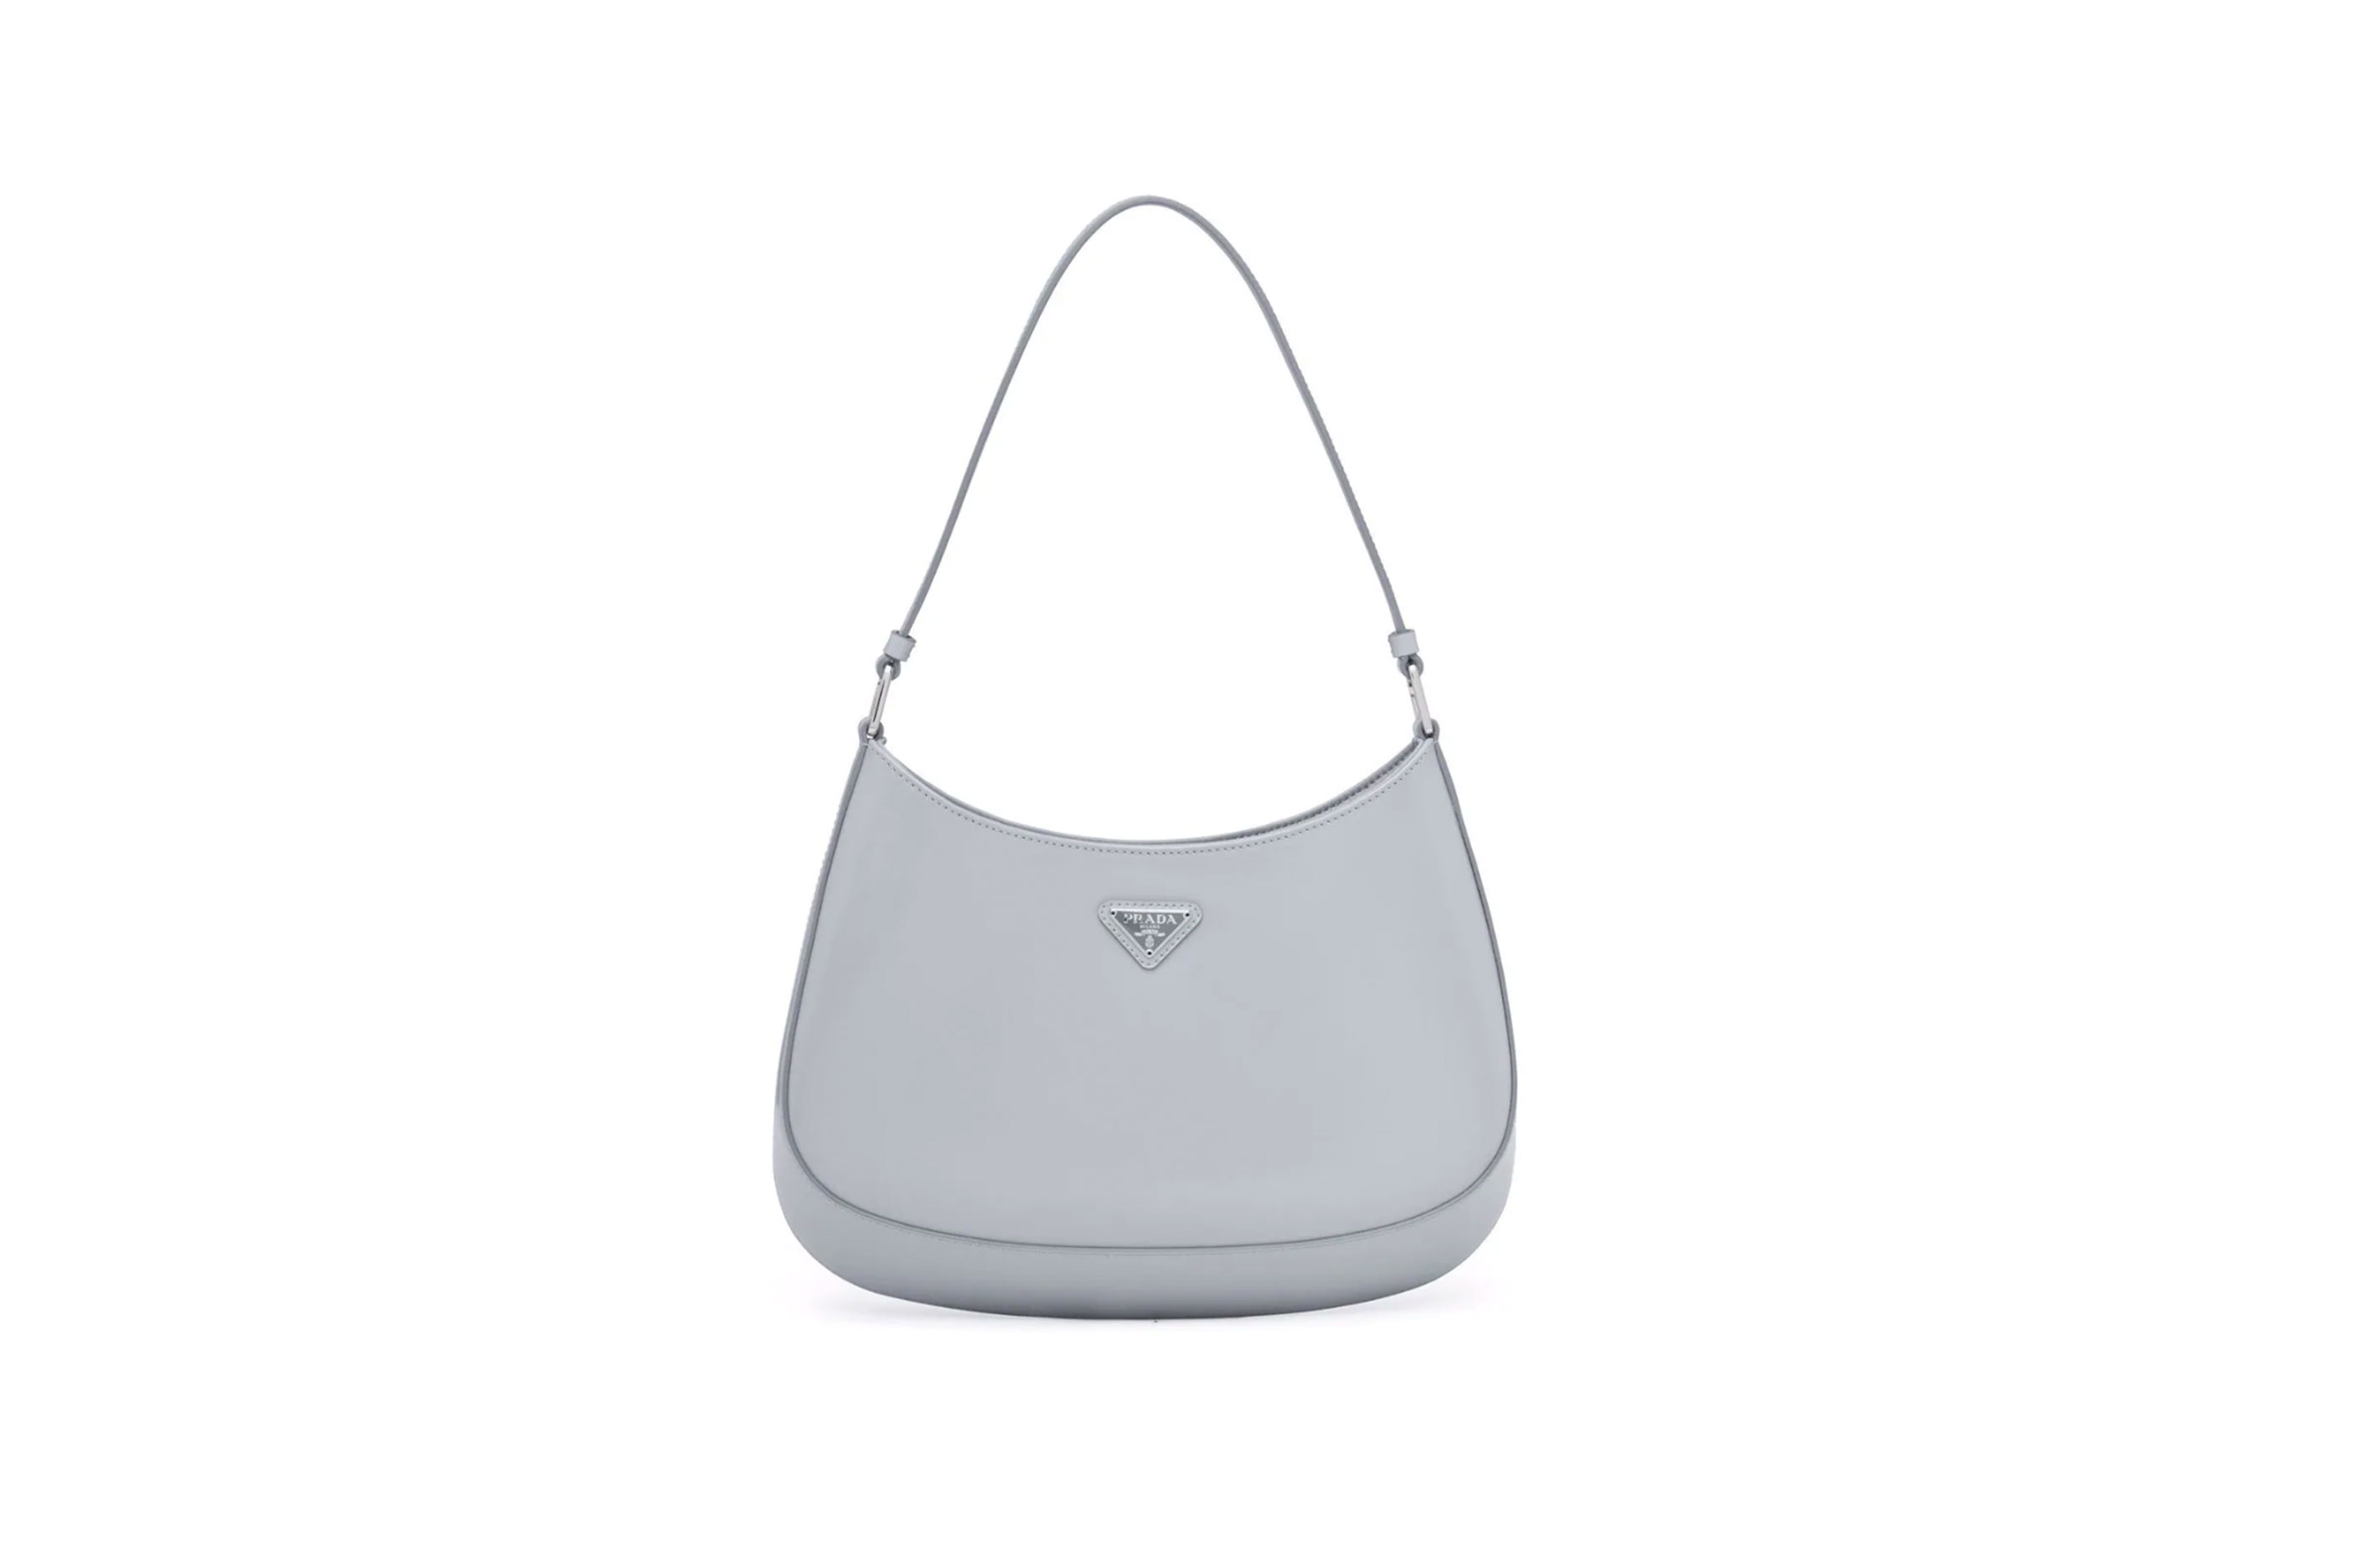 Prada Cleo Mini bag is on everyone's 2022 wish list